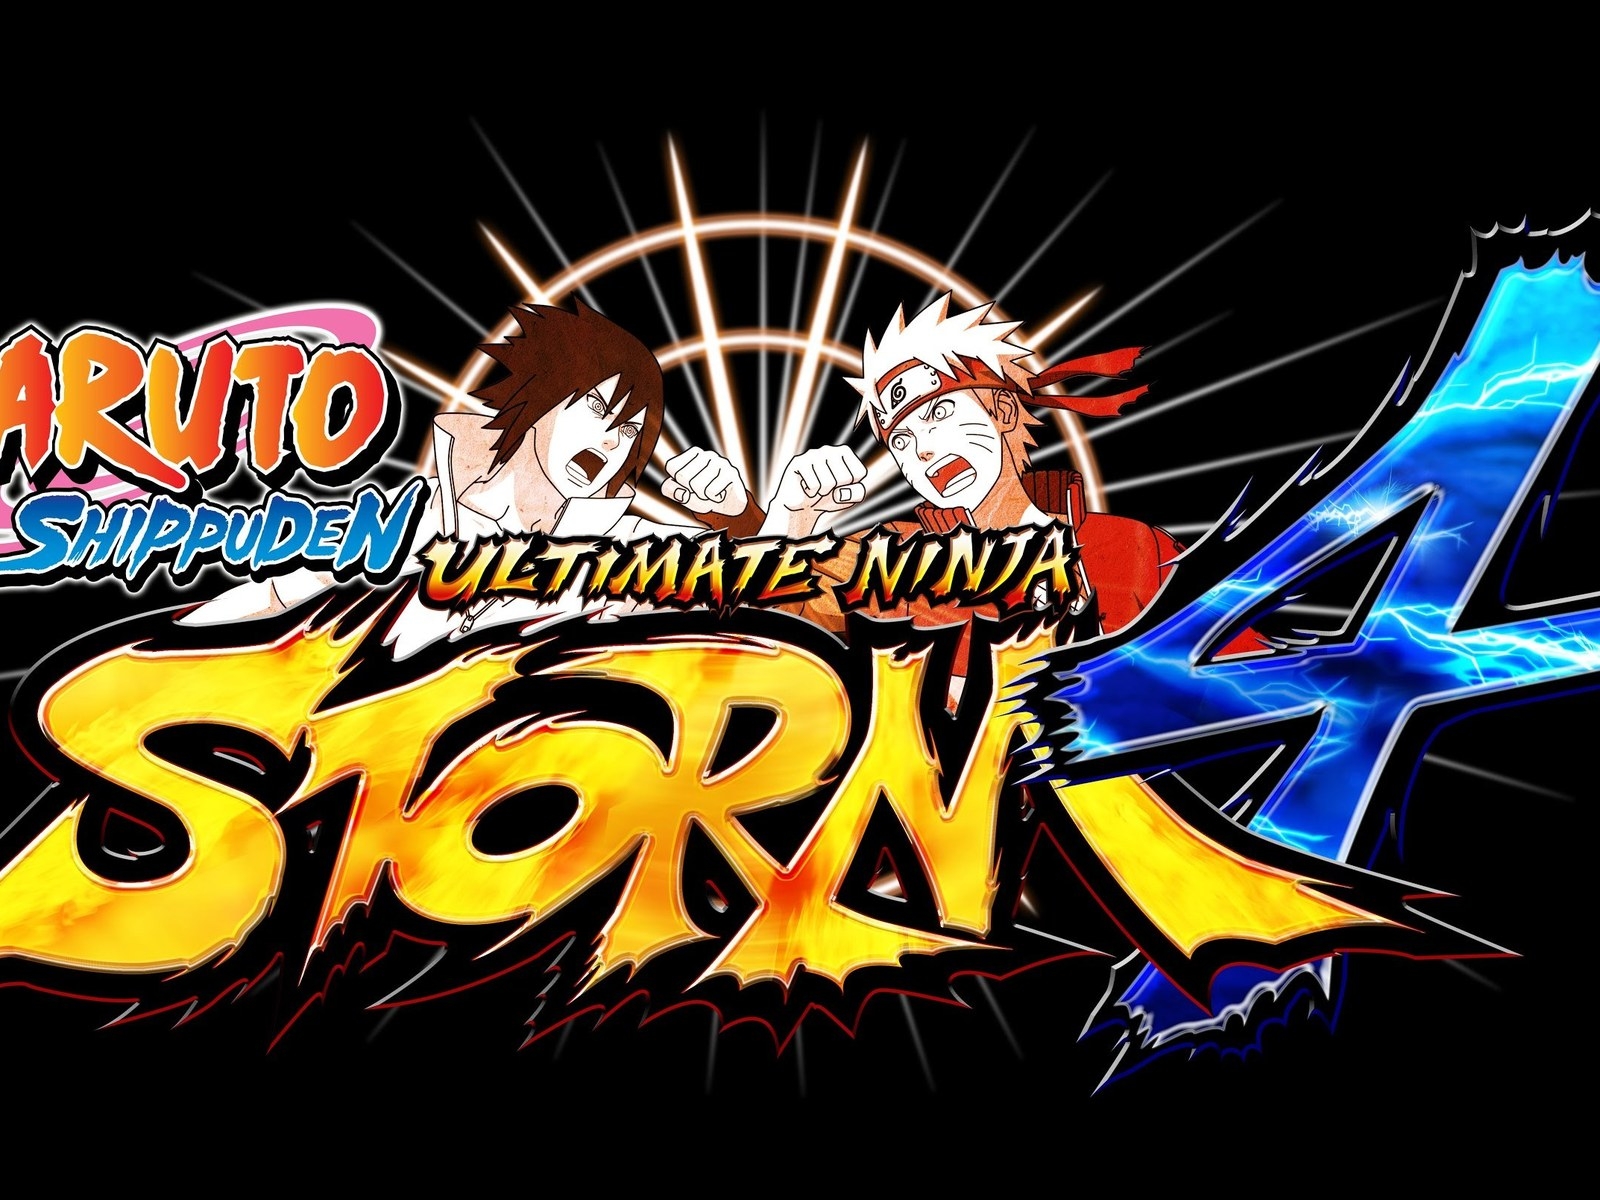 Naruto Shippuden Ultimate Ninja Storm 4 Poster for 1600 x 1200 resolution